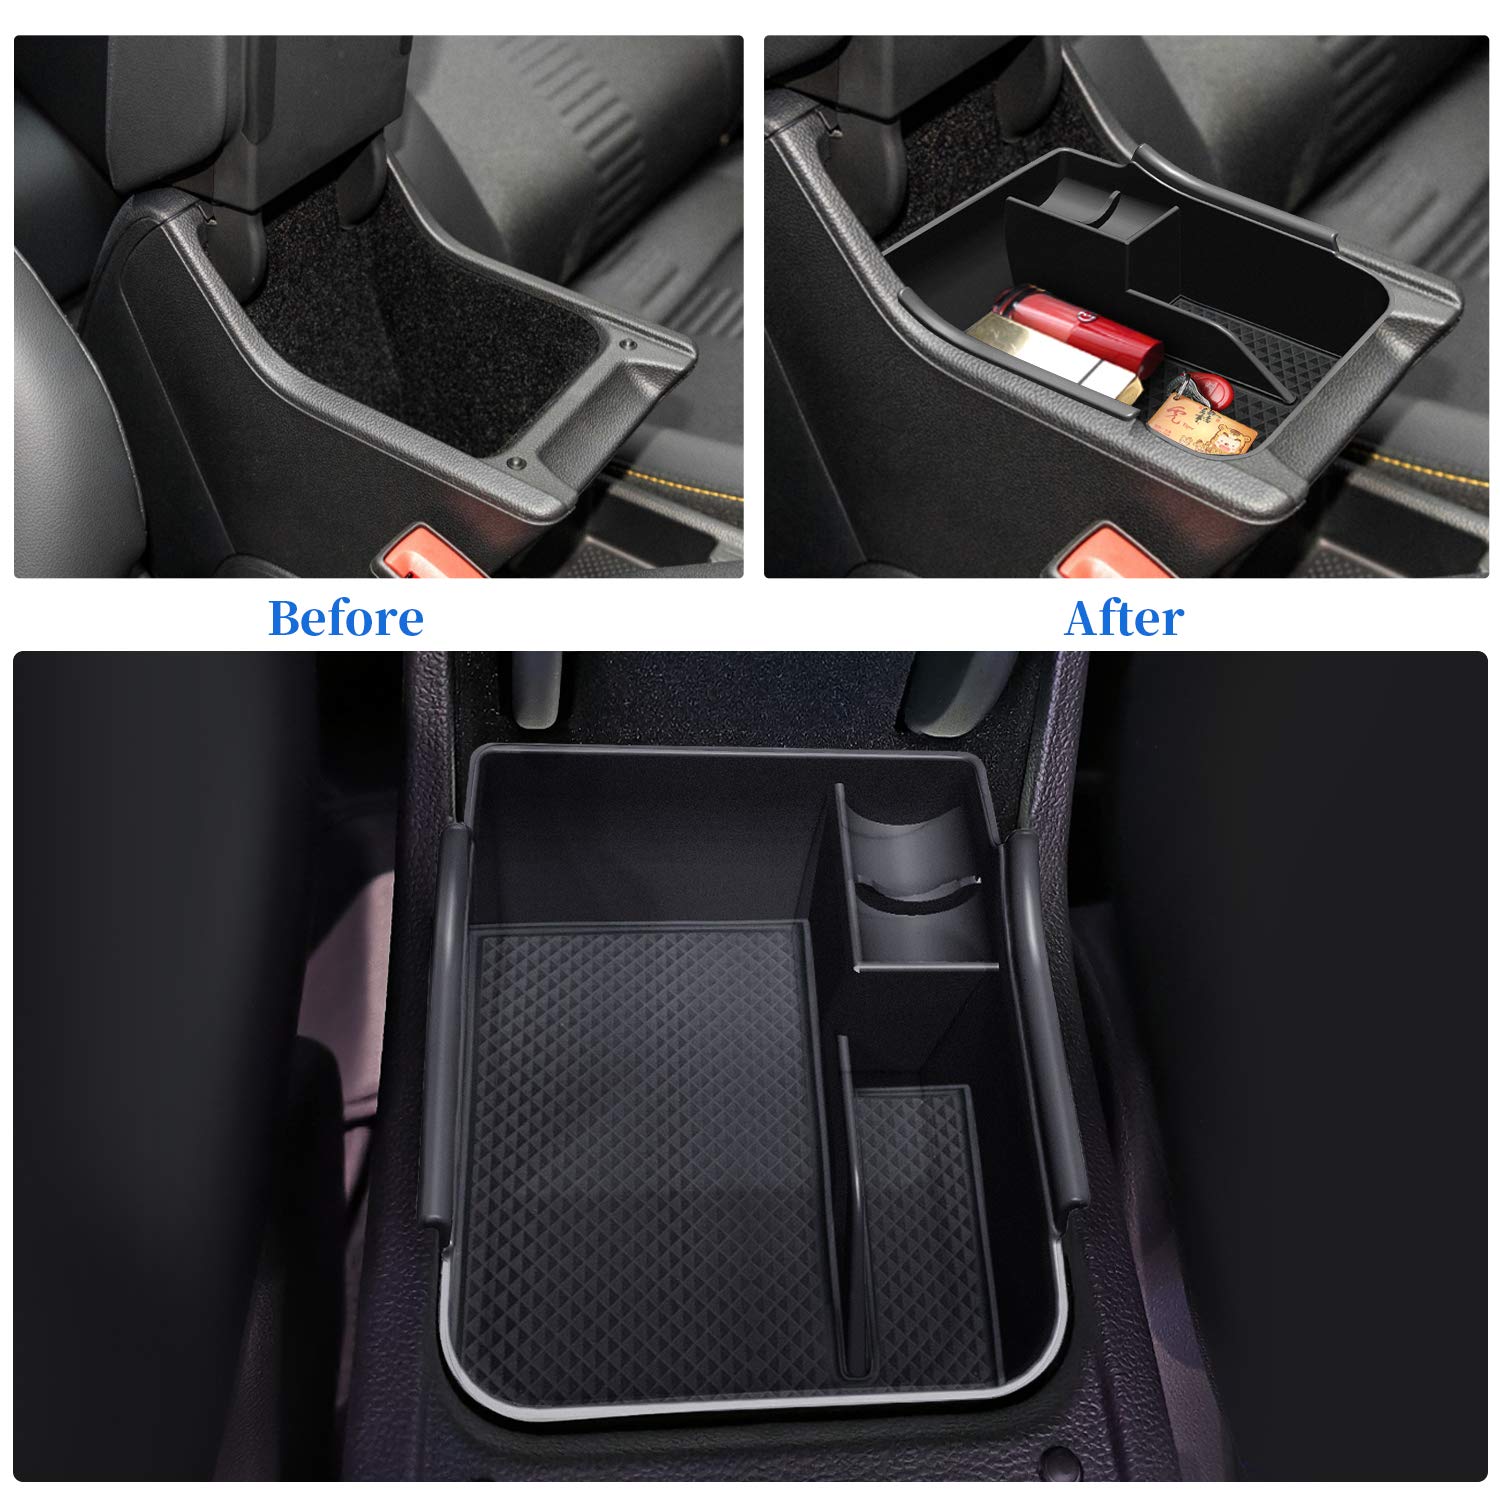 VW Polo MK6 Center Armrest Storage Tray 2018+ - LFOTPP Car Accessories